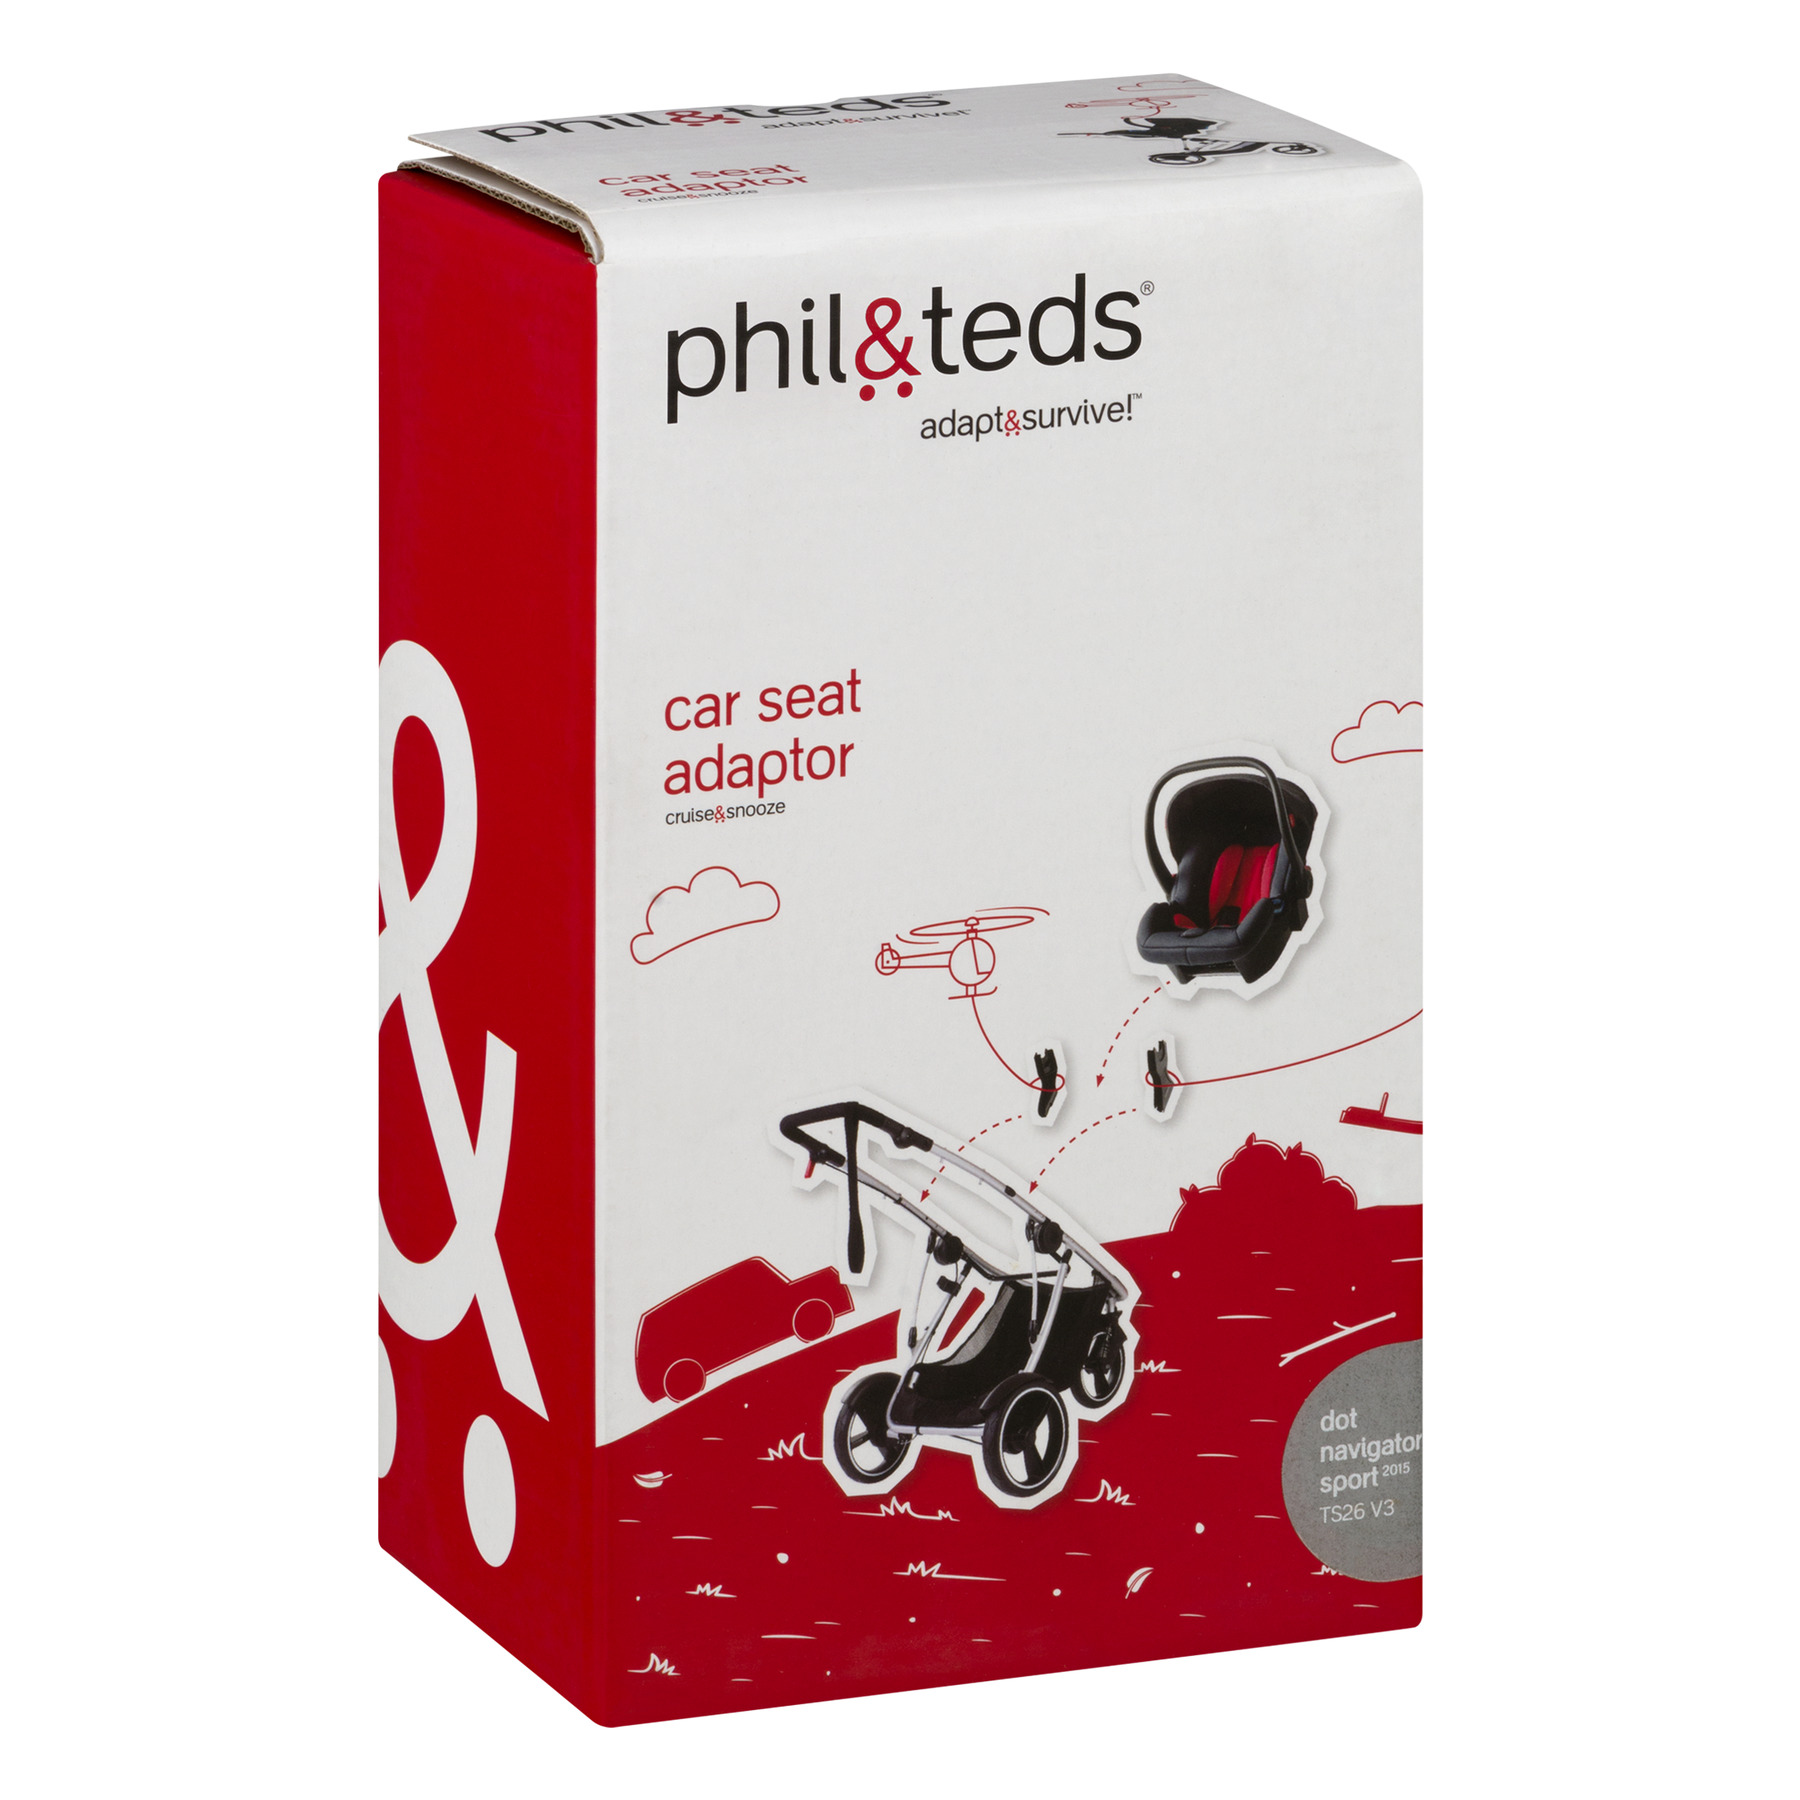 phil & teds car seat adaptor